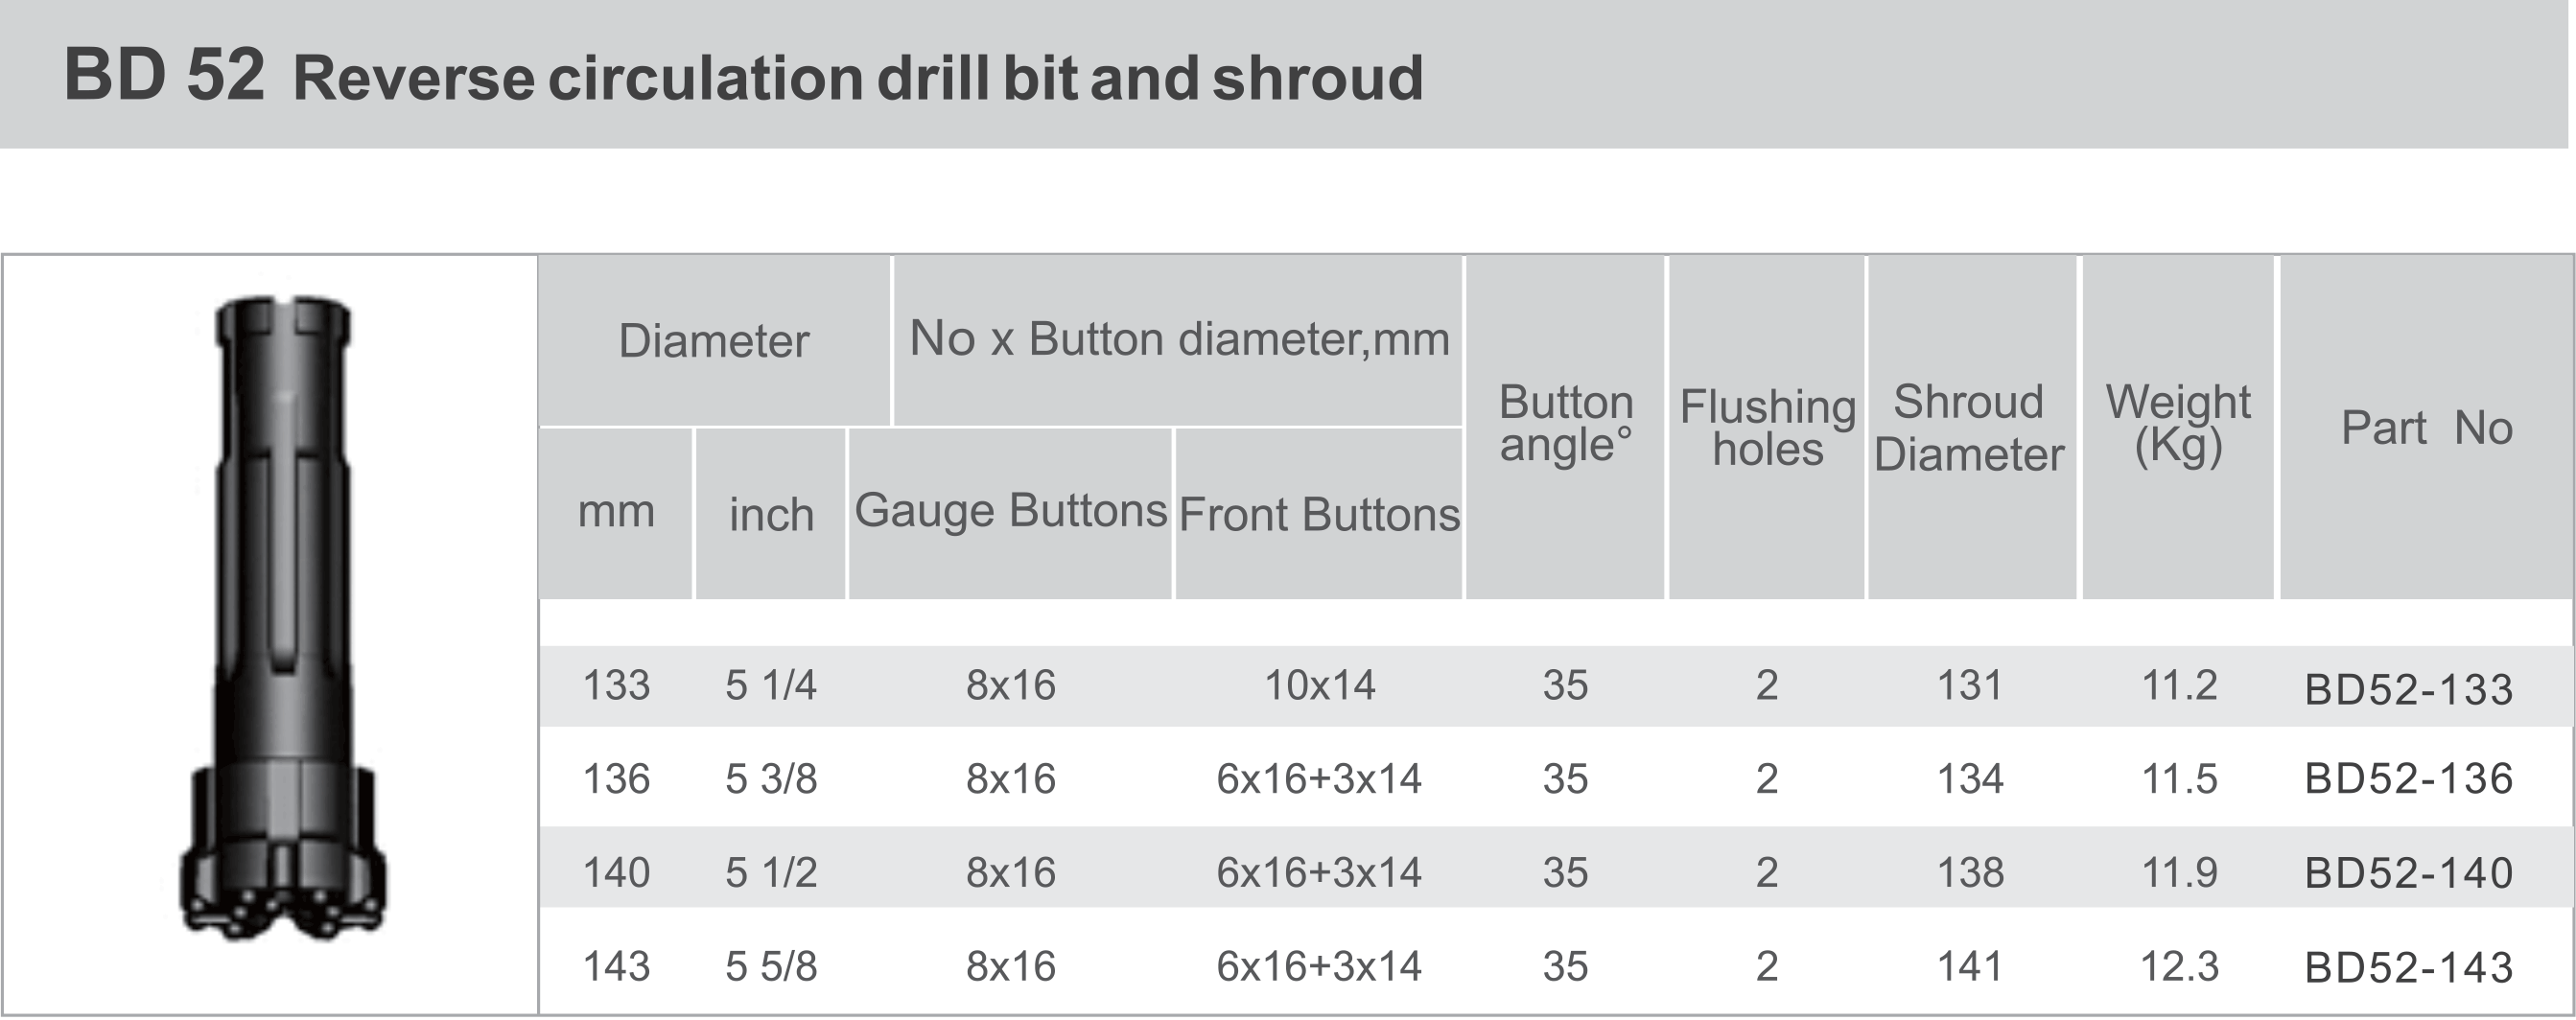 Black Diamond Drilling BD52 RC Reverse Circulation Drill Bit Shroud technical data